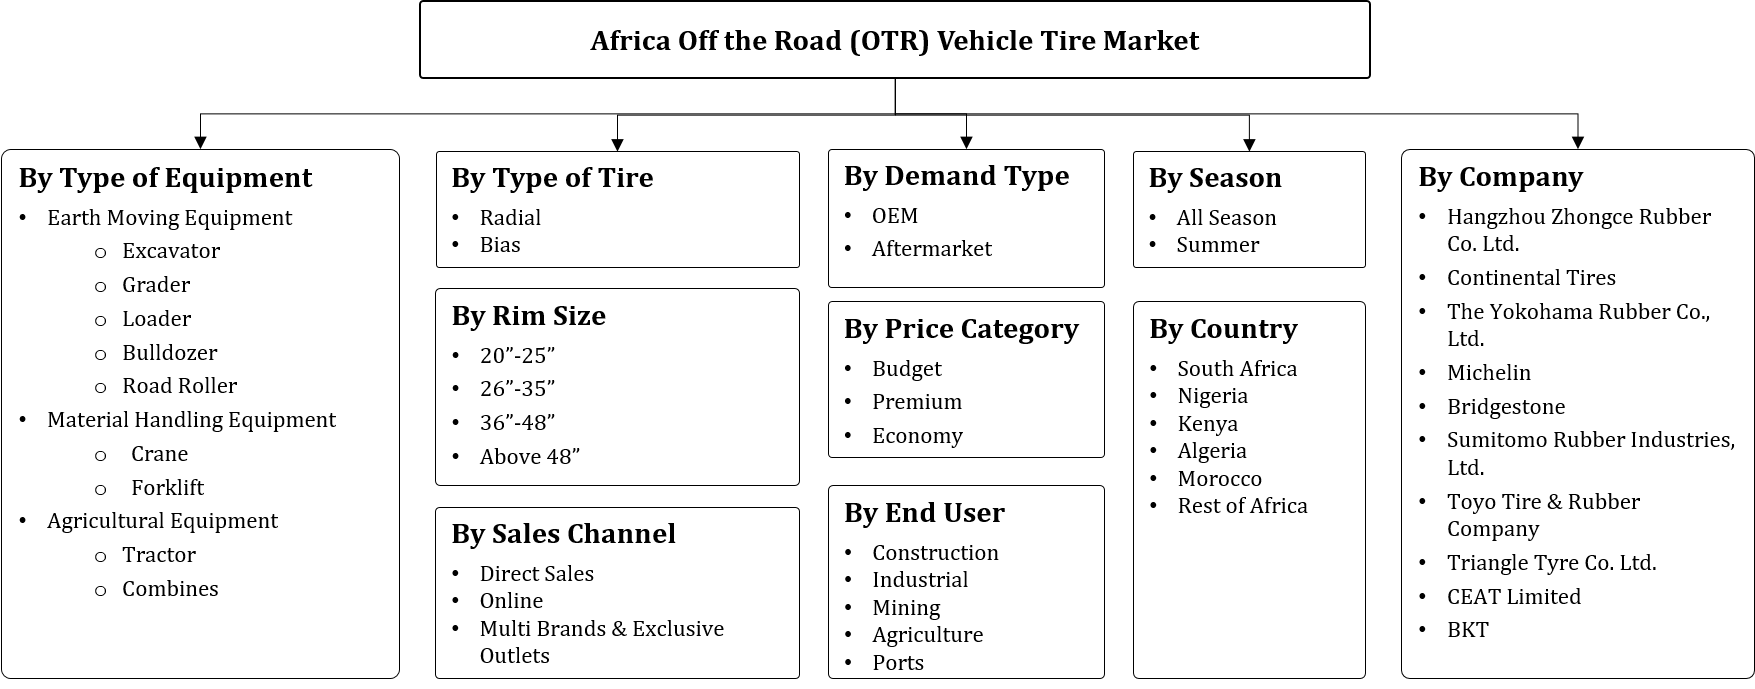 Africa Off the Road (OTR) Tire Market Segmentation